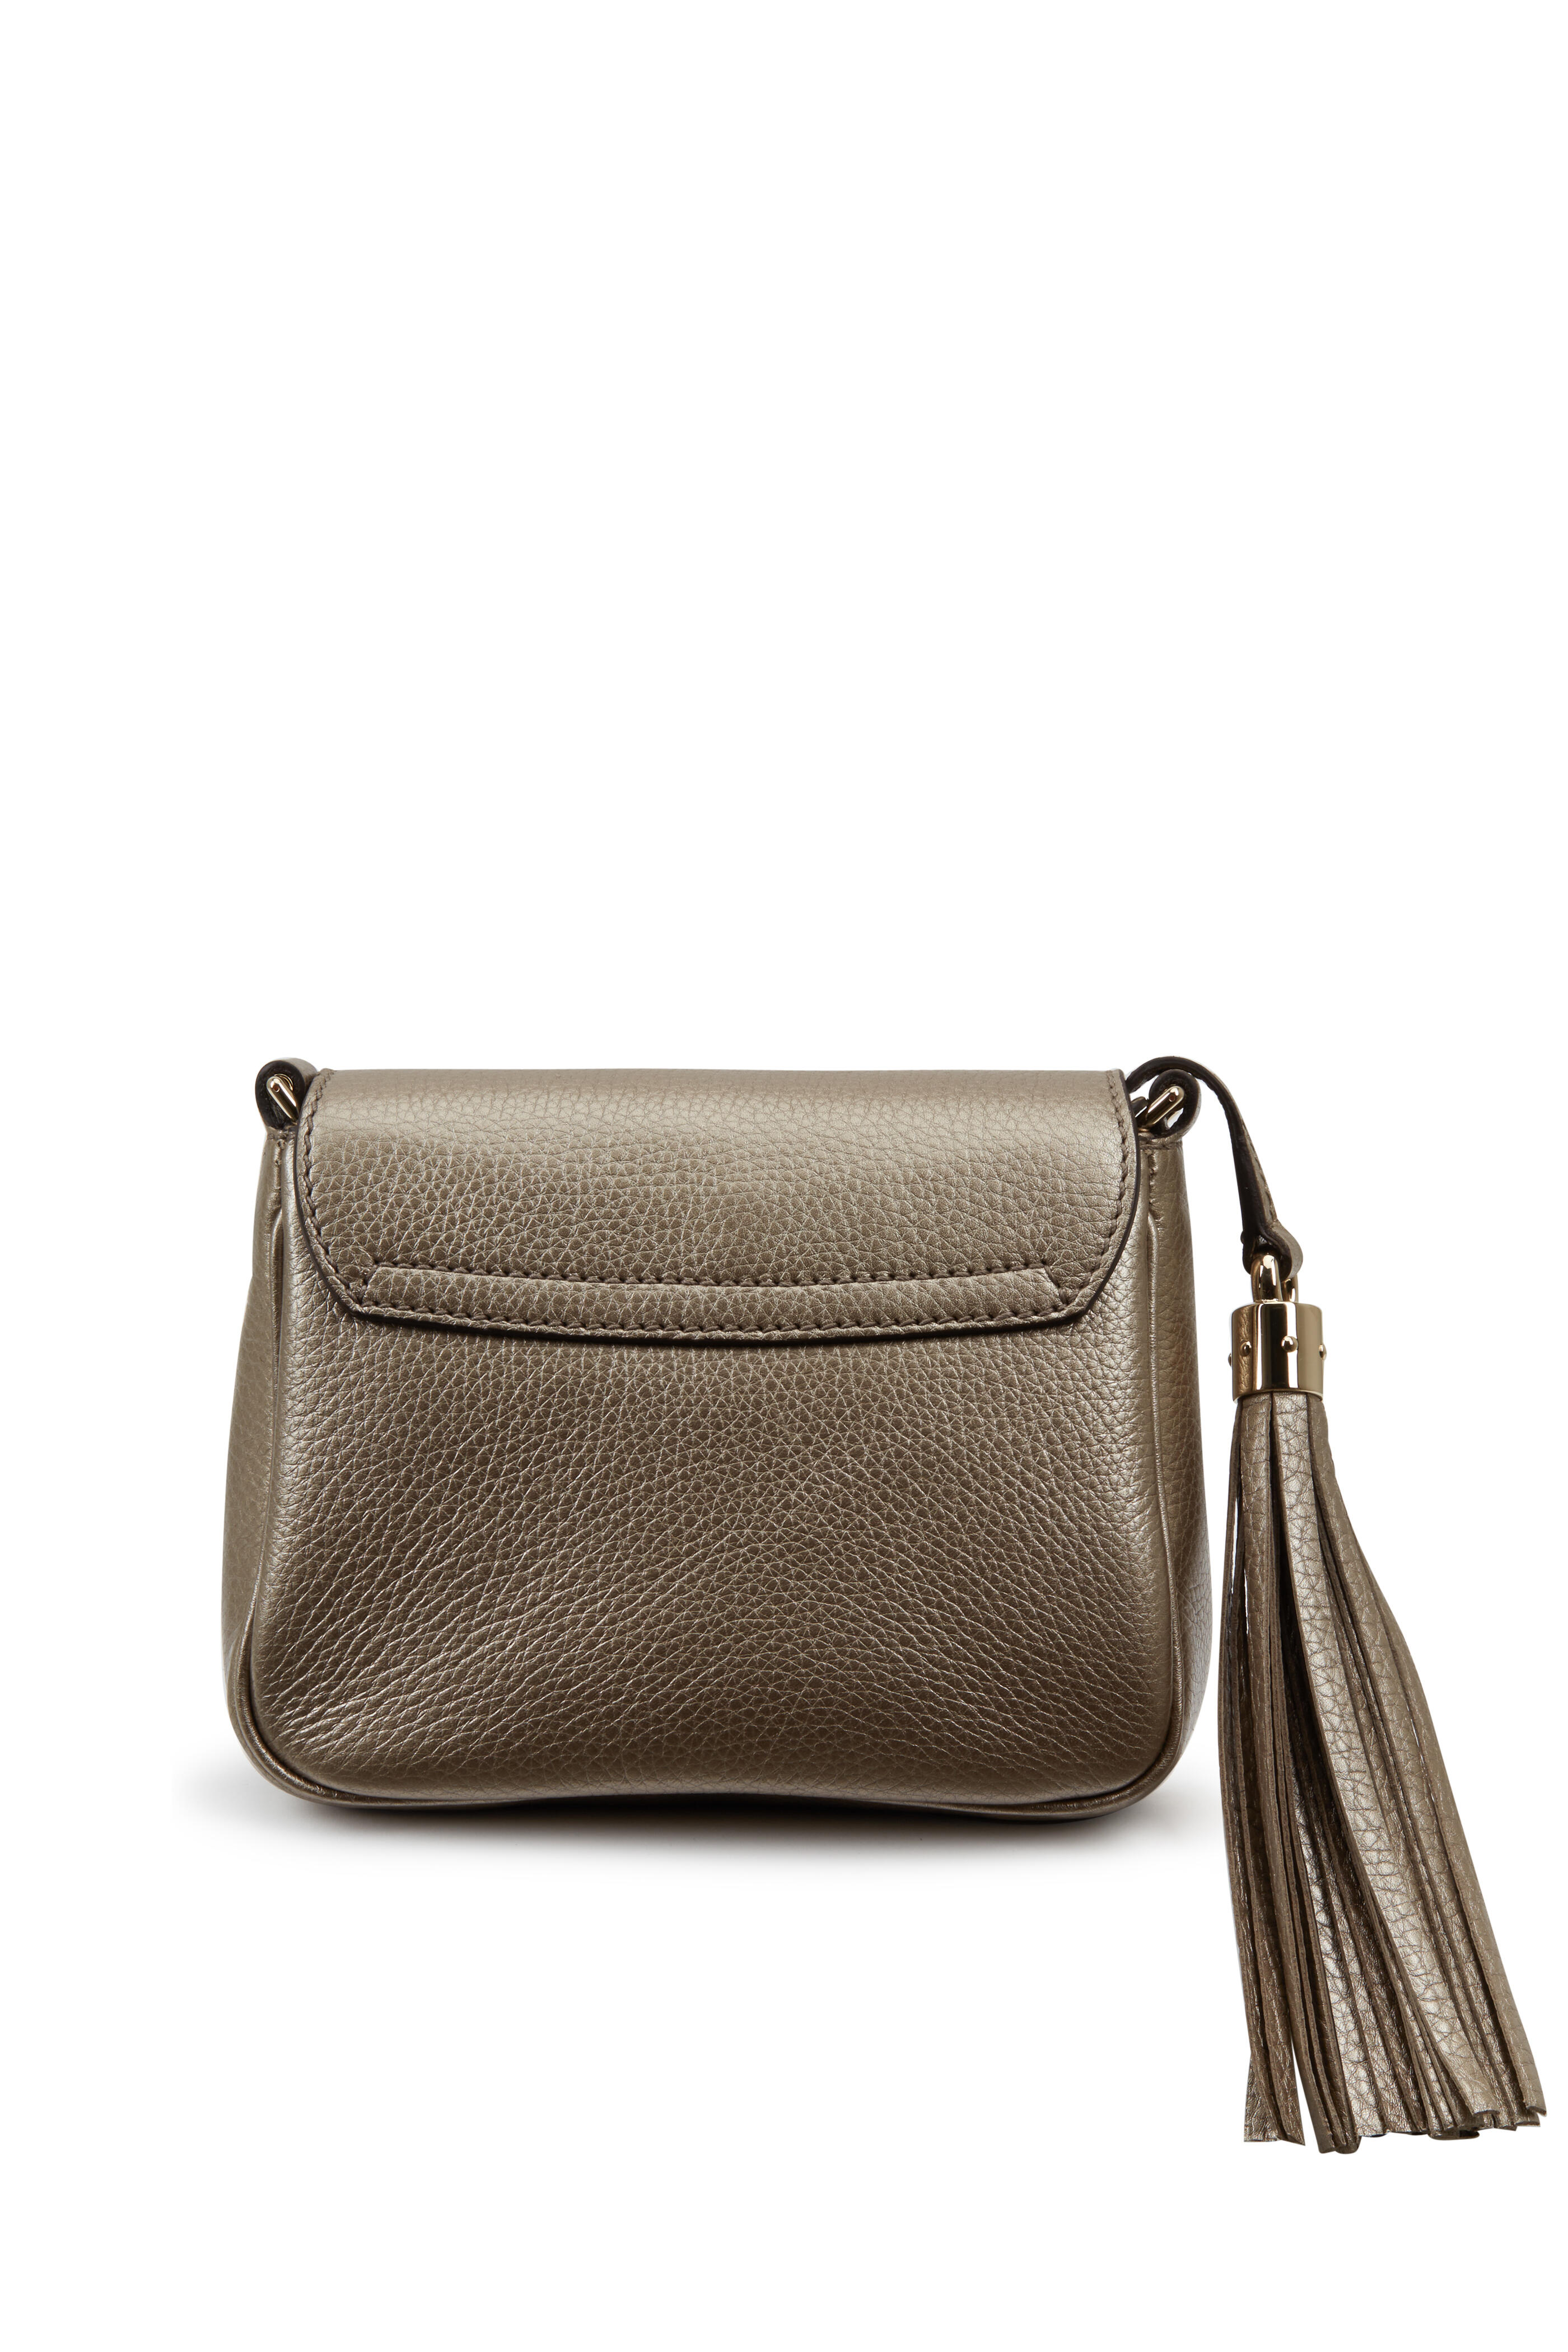 Gucci Soho Black GG Supreme Wallet Gold Italy Leather Handbag Bag Clut– Bag  Lady Shop